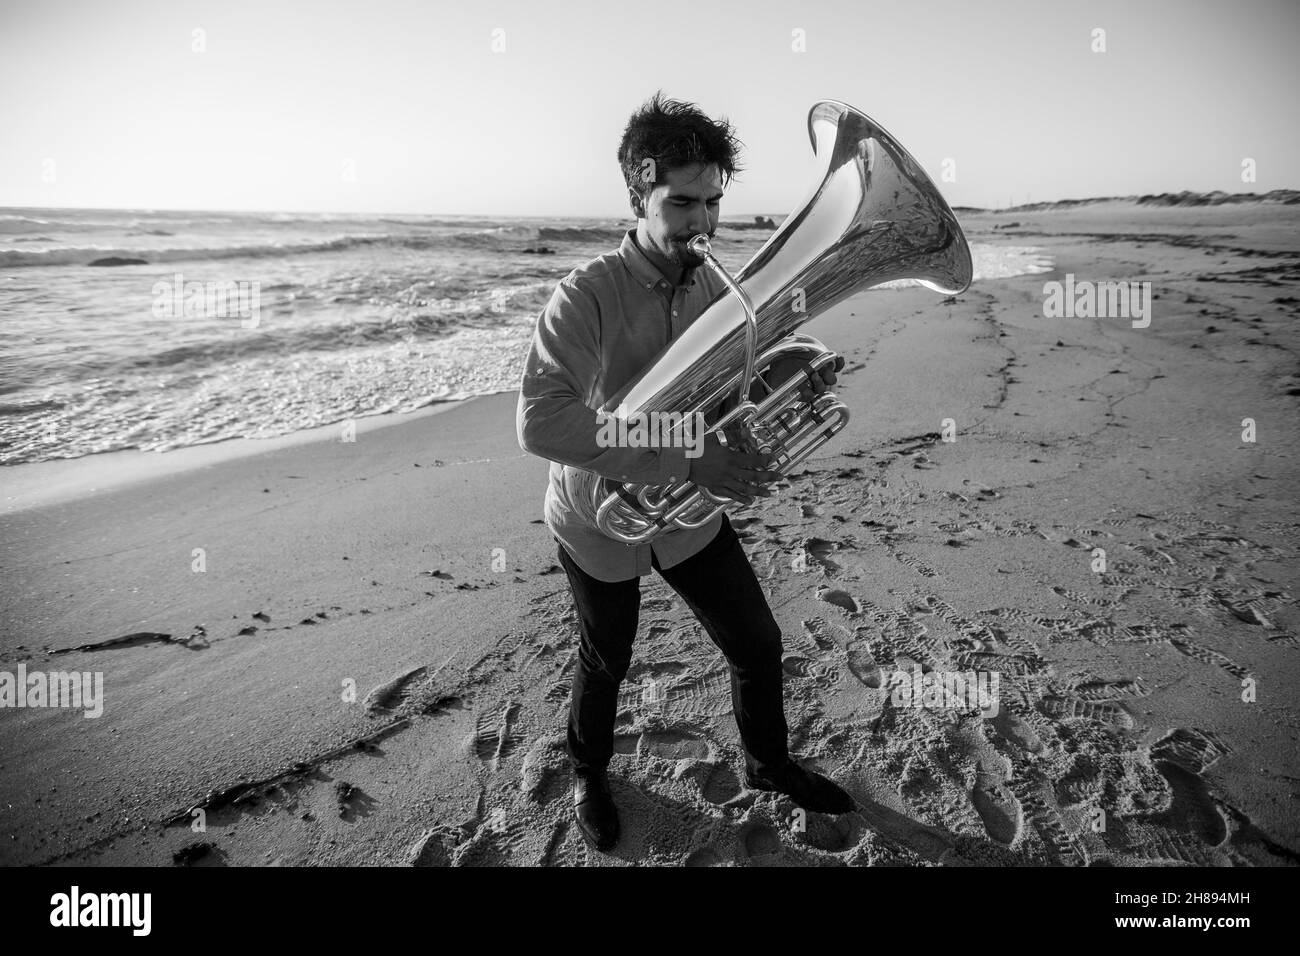 Man musician plays the tuba near the ocean. Black and white photo. Stock Photo